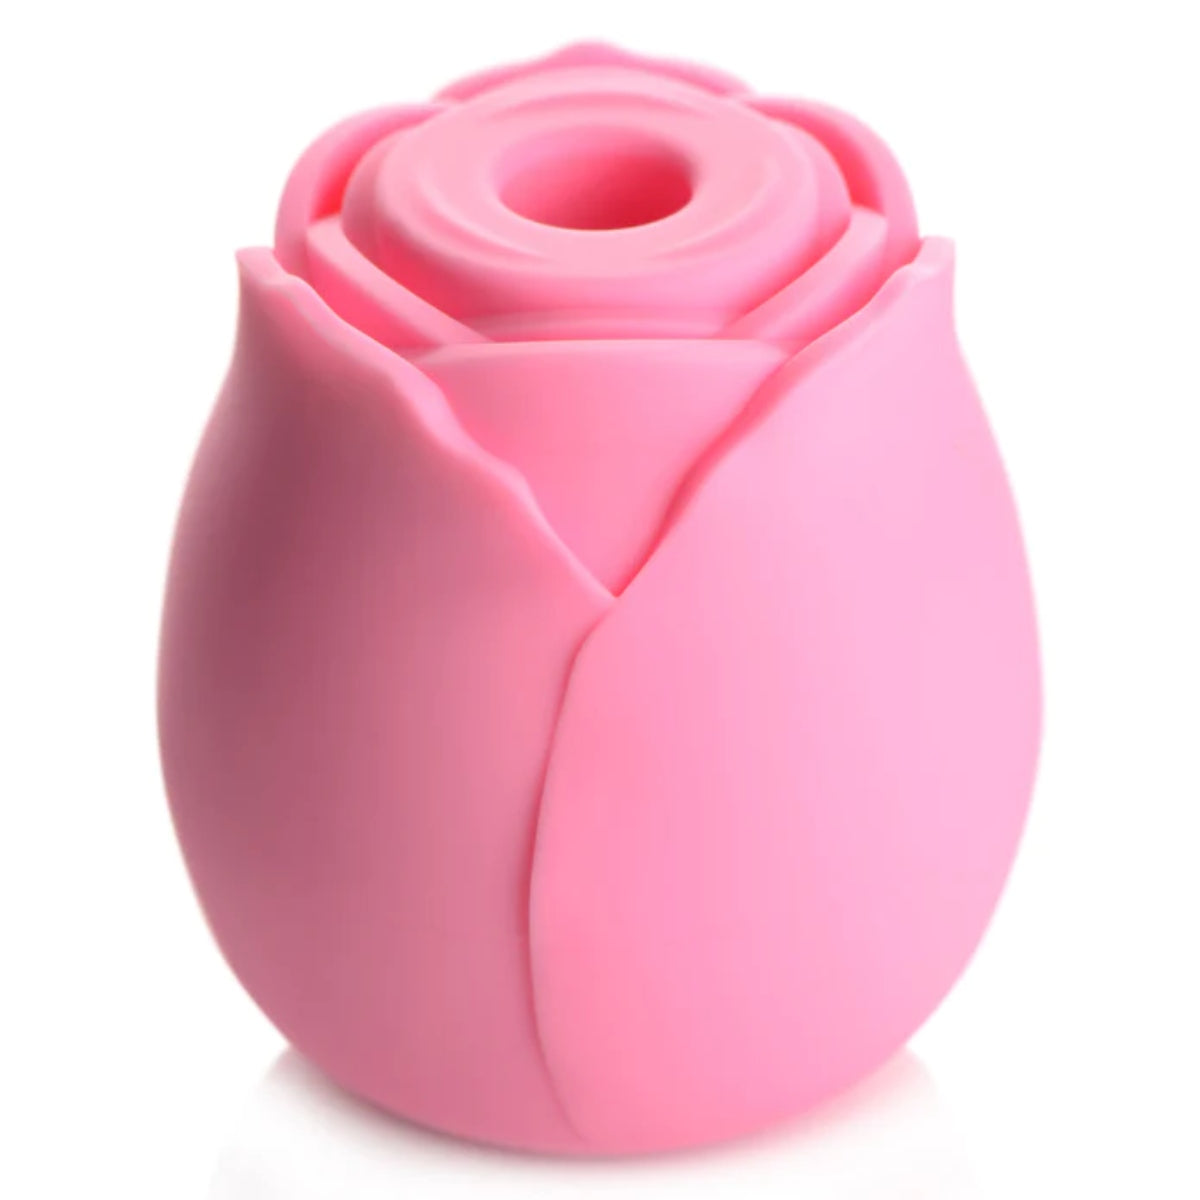 The Rose Lover's Clit Sucking Rose Vibrator Gift Box